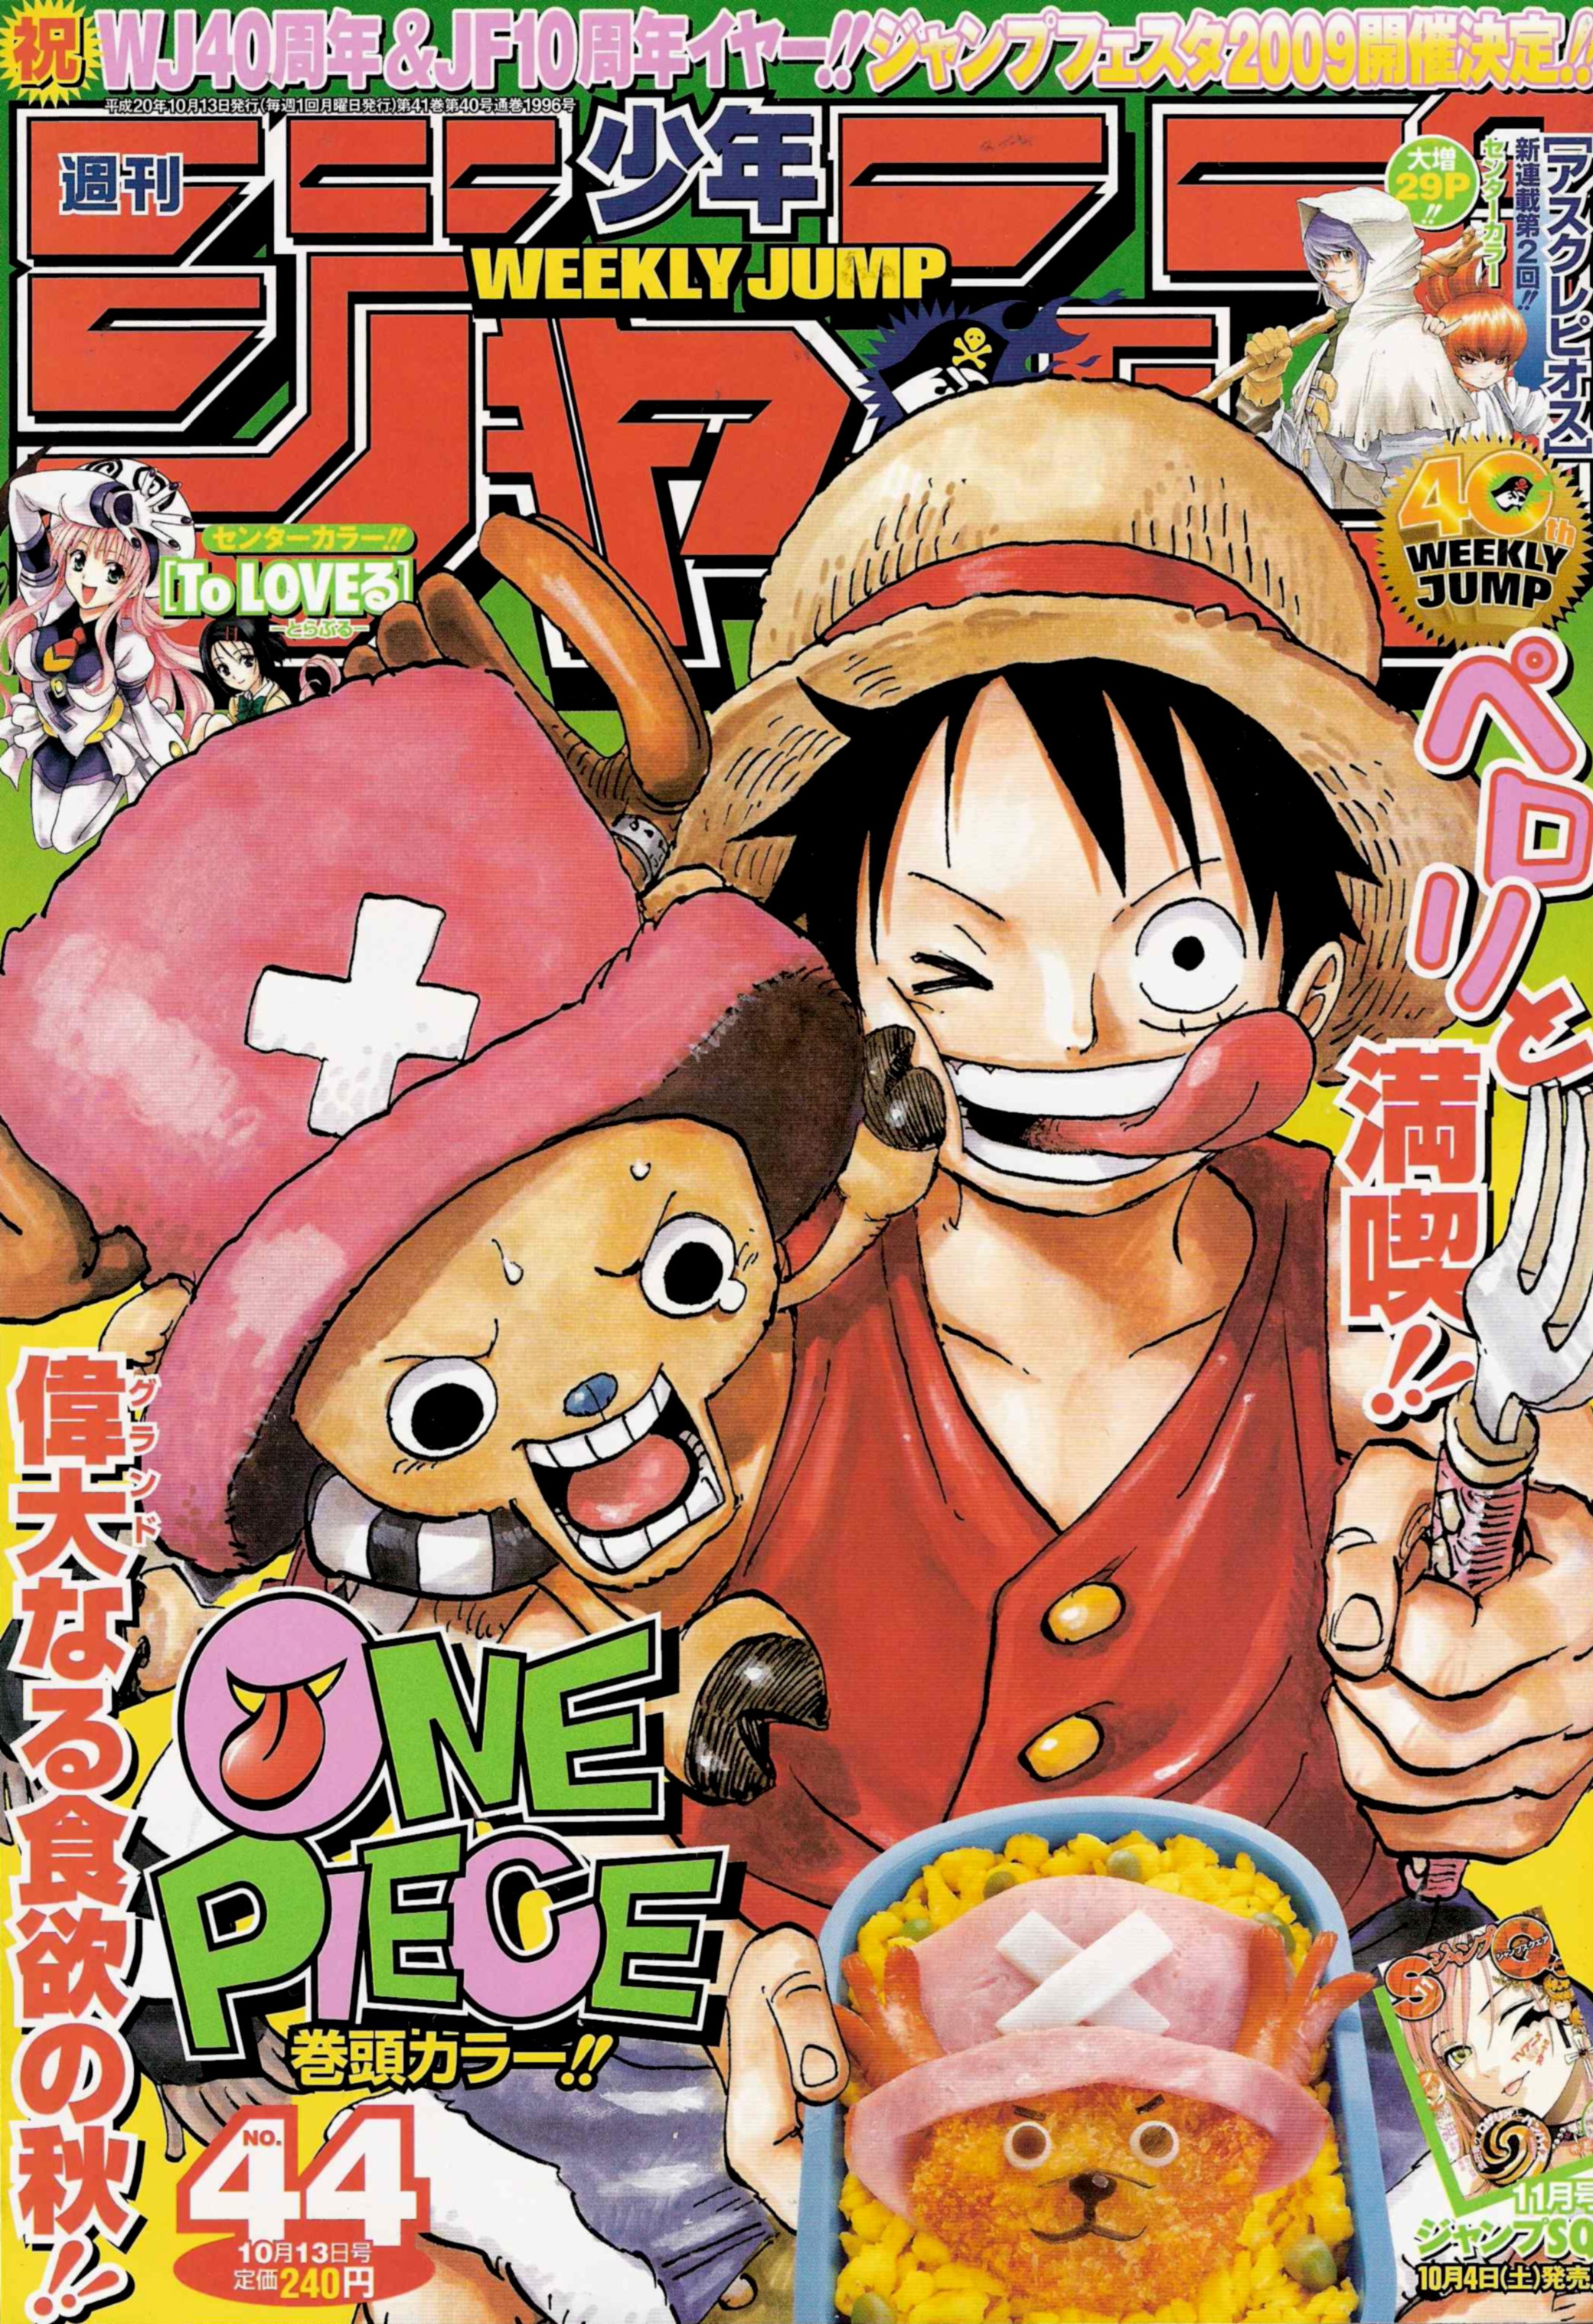 Shonen Jump Covers Check Pinned 08 No 44 Cover One Piece By Eiichiro Oda T Co Sq5ca6lyri Twitter